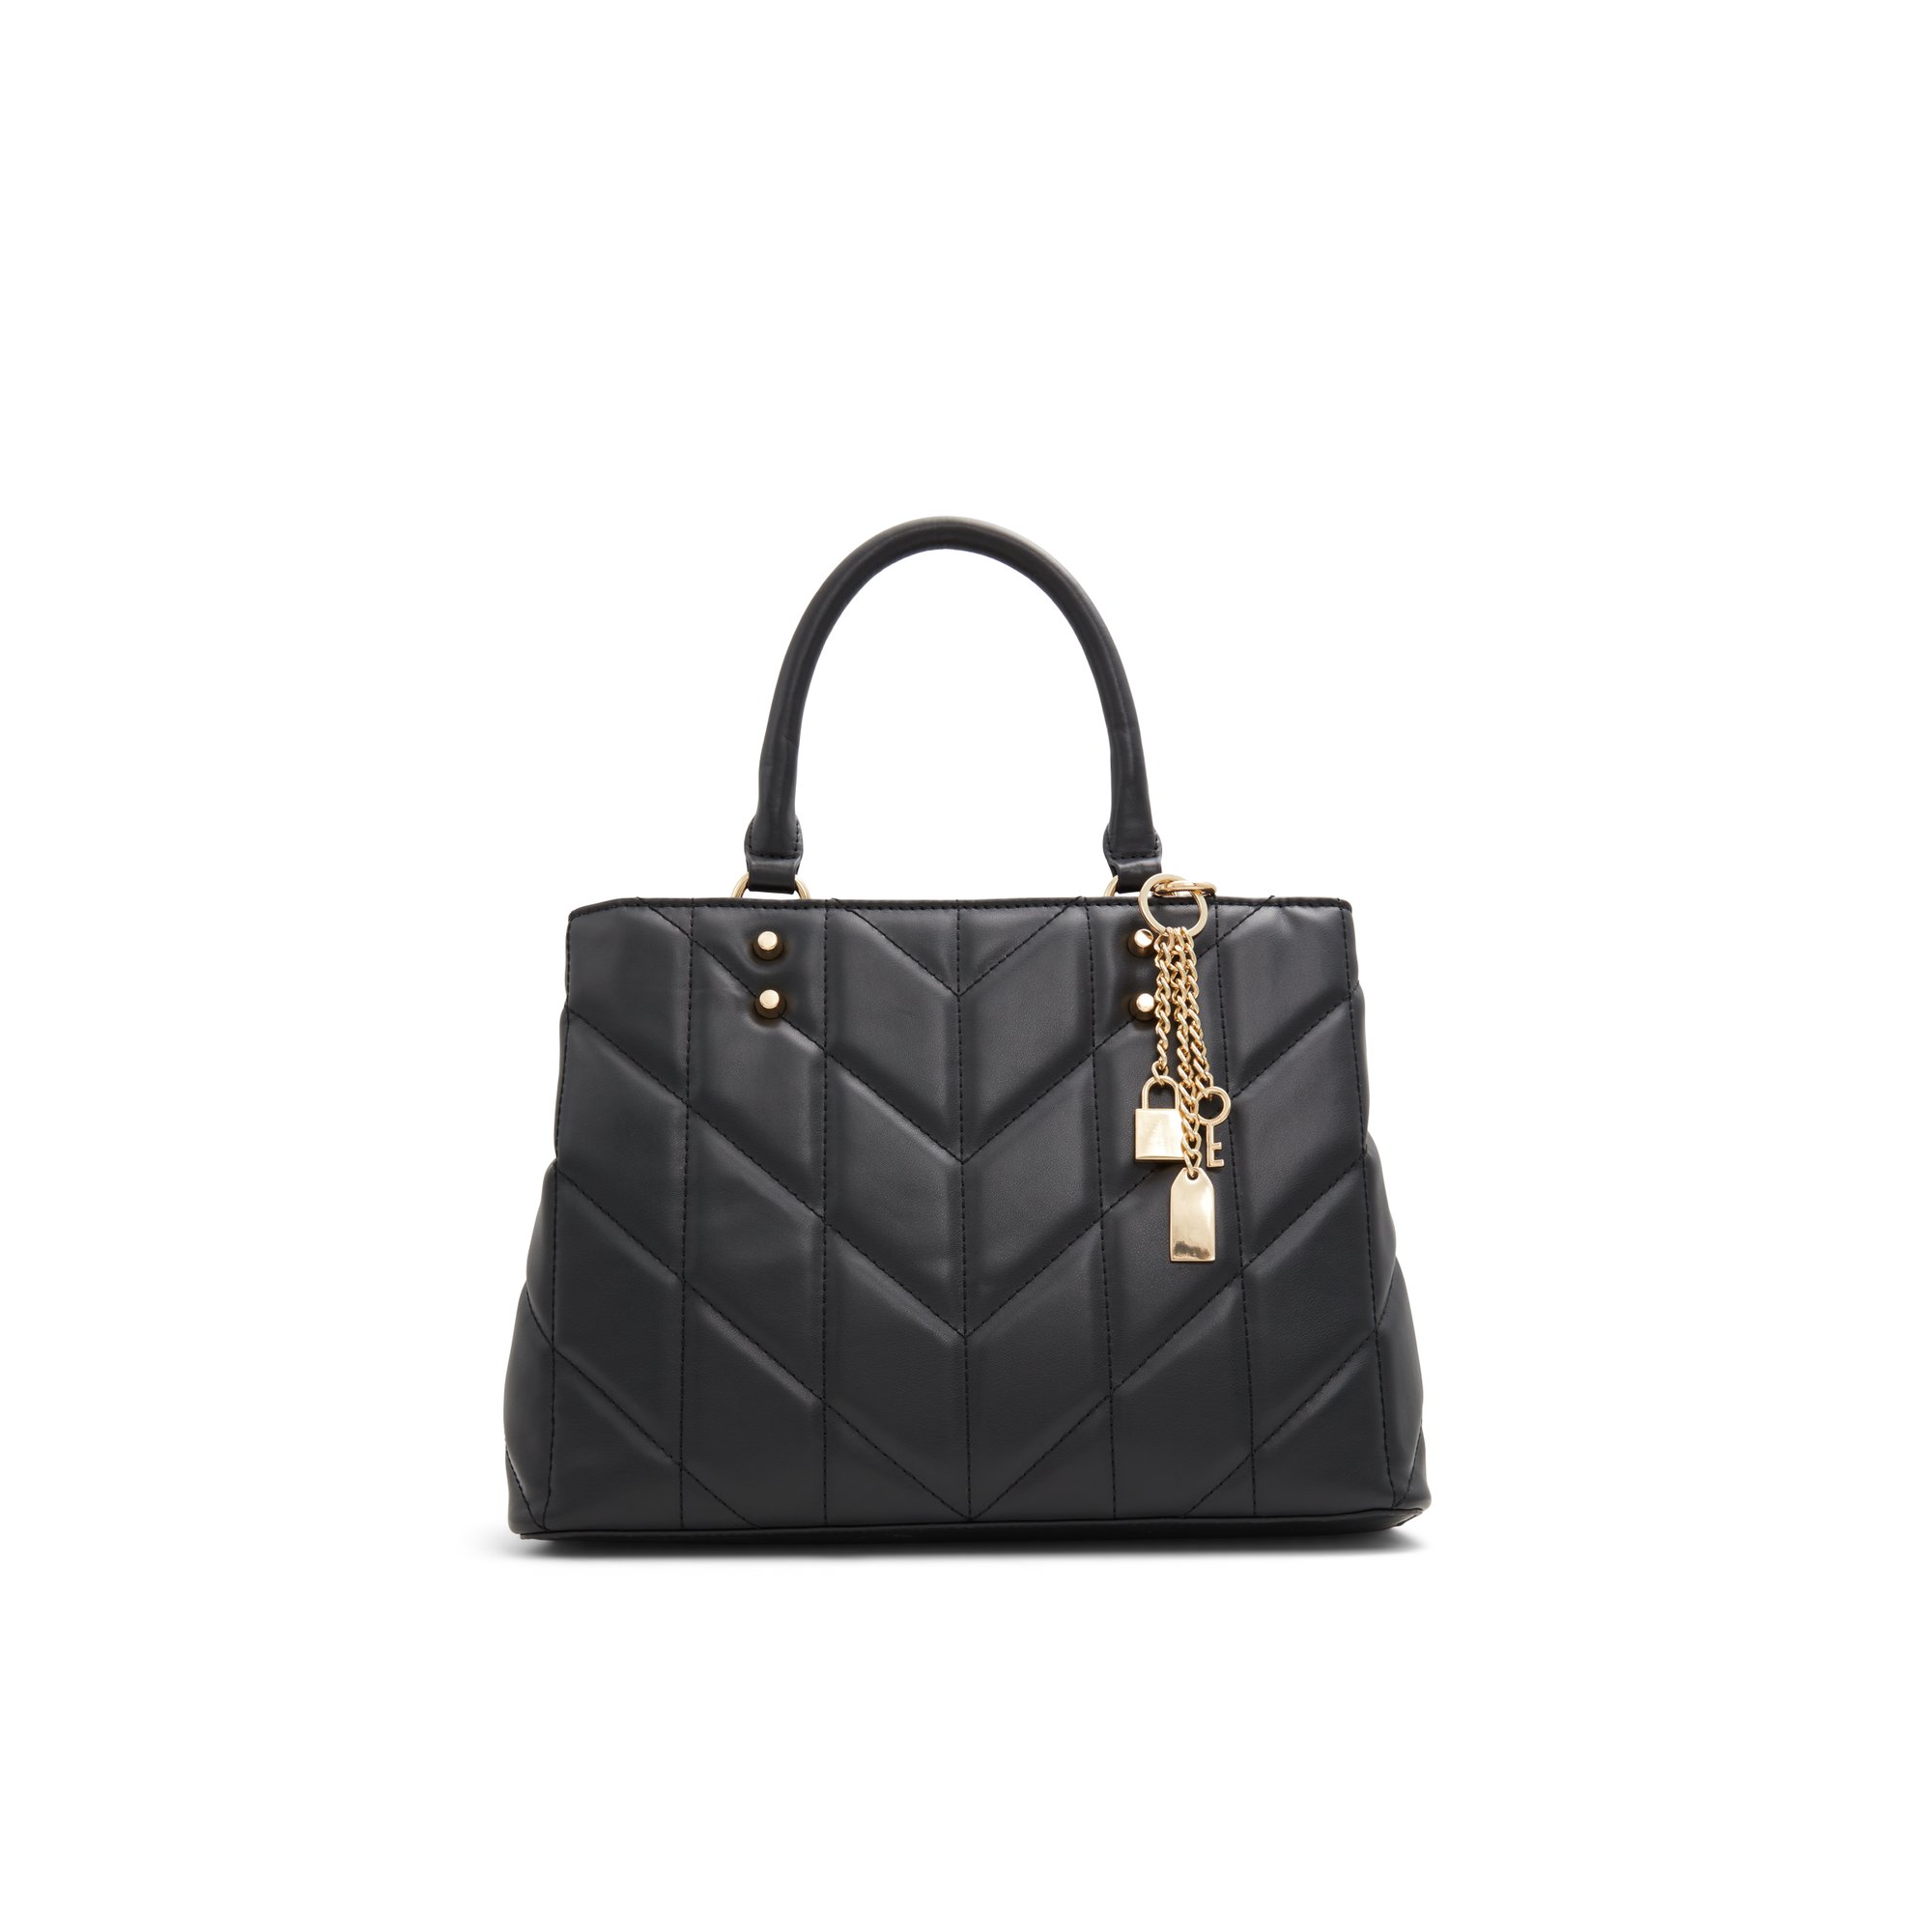 ALDO Safiraax - Women's Handbags Totes - Black